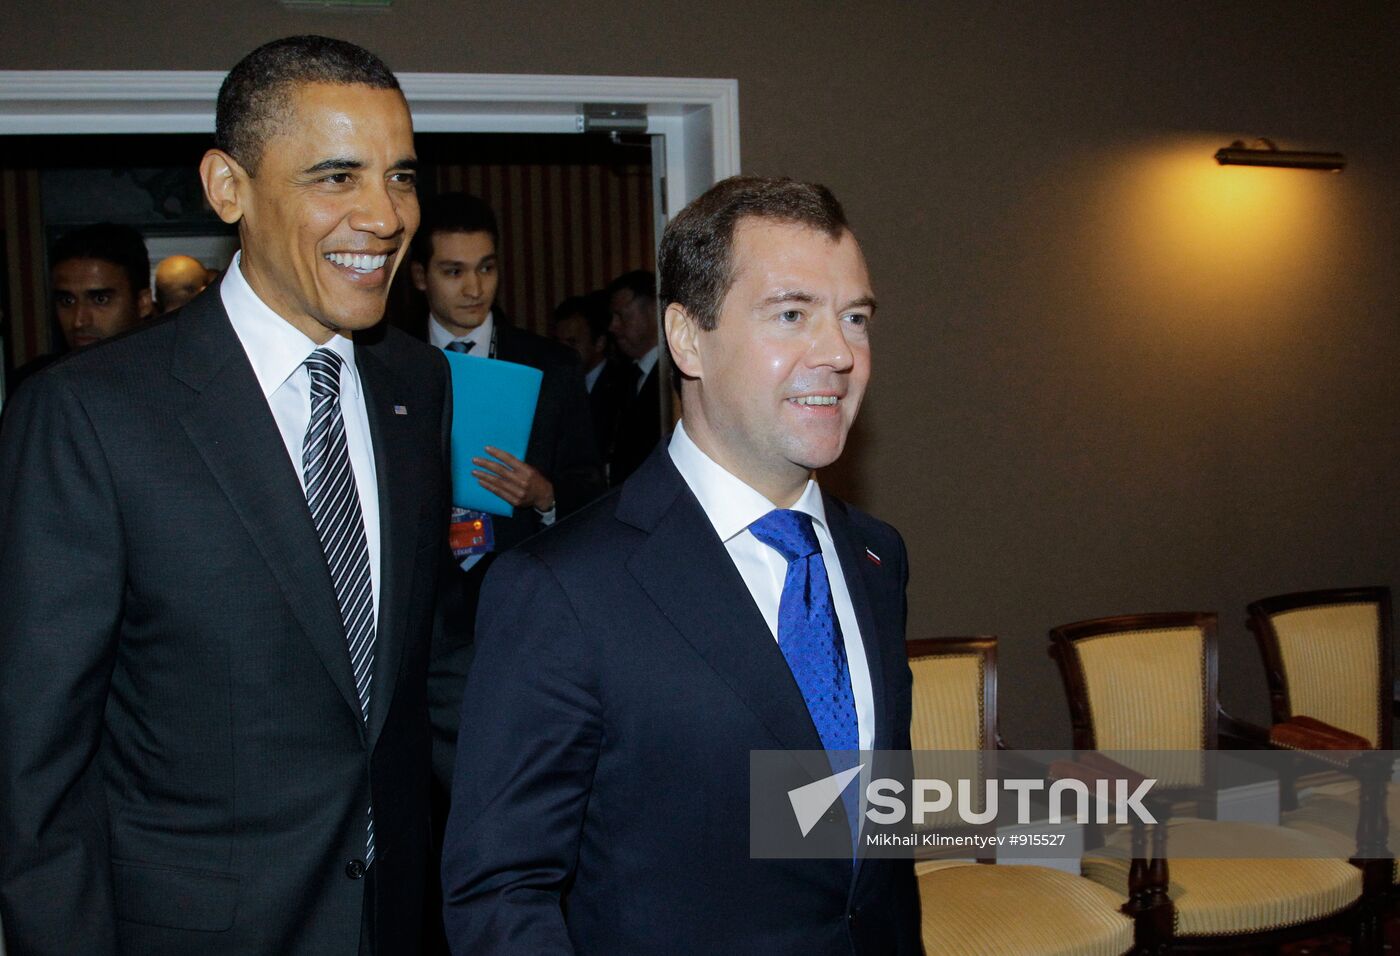 Dmitry Medvedev at G8 Summit in Deauville